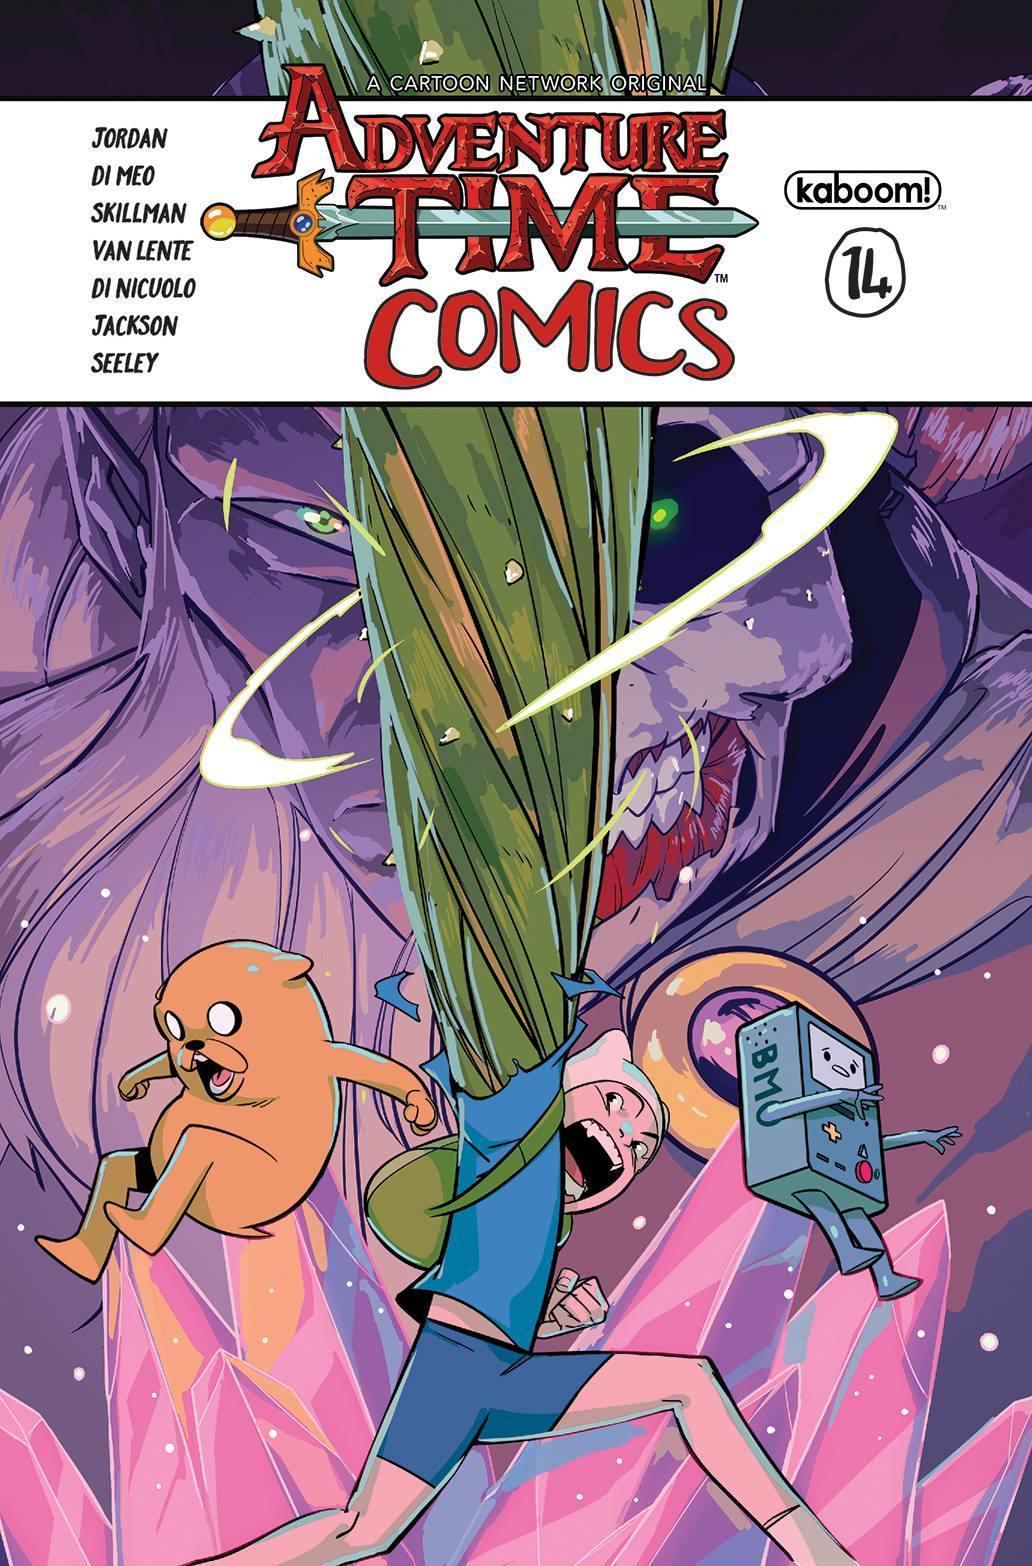 ADVENTURE TIME COMICS #14 - Kings Comics